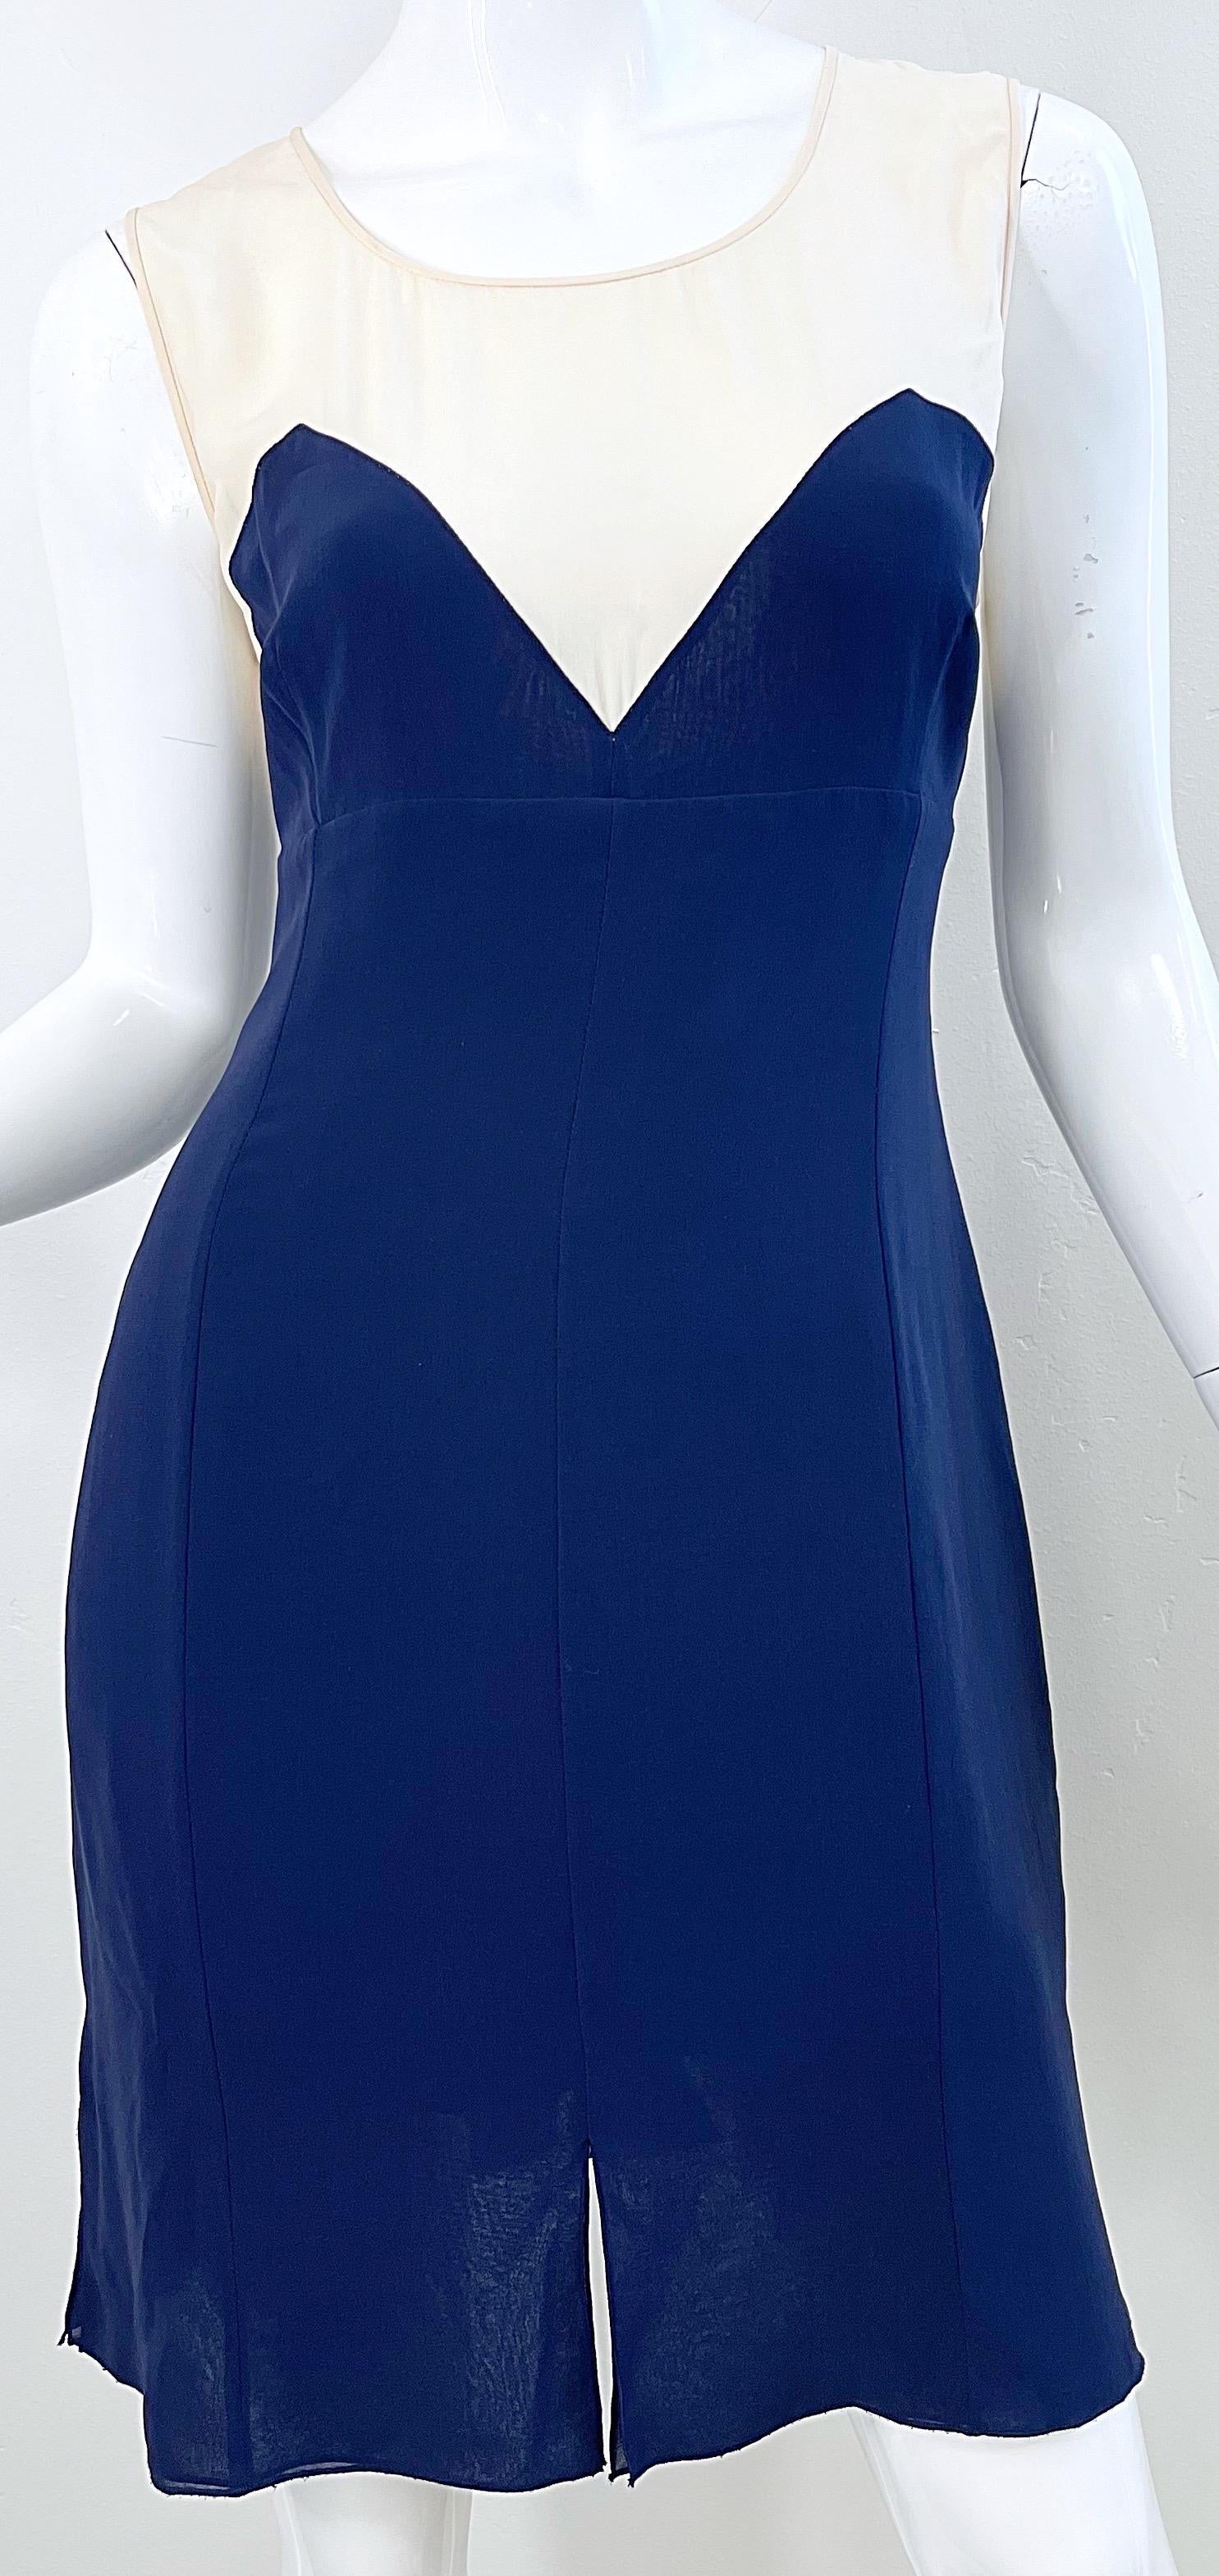 Karl Lagerfeld 1980s Size 44 / US 10 Navy Blue Silk Chiffon Vintage 80s Dress For Sale 2